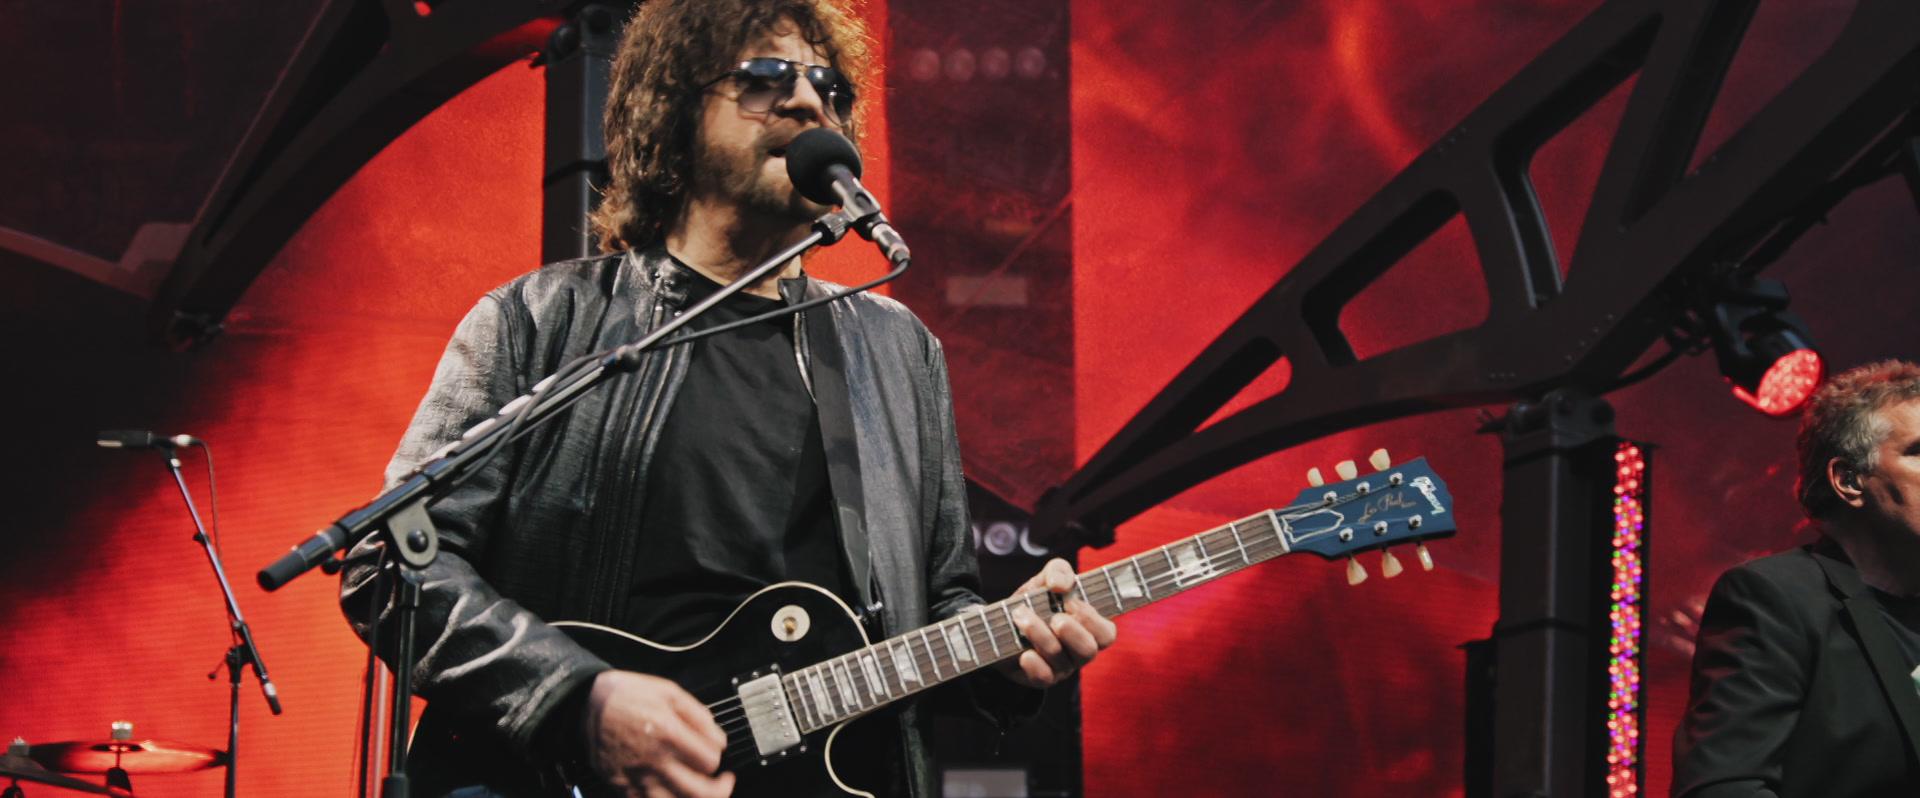 Jeff Lynne's ELO - Evil Woman (Live at Wembley Stadium)